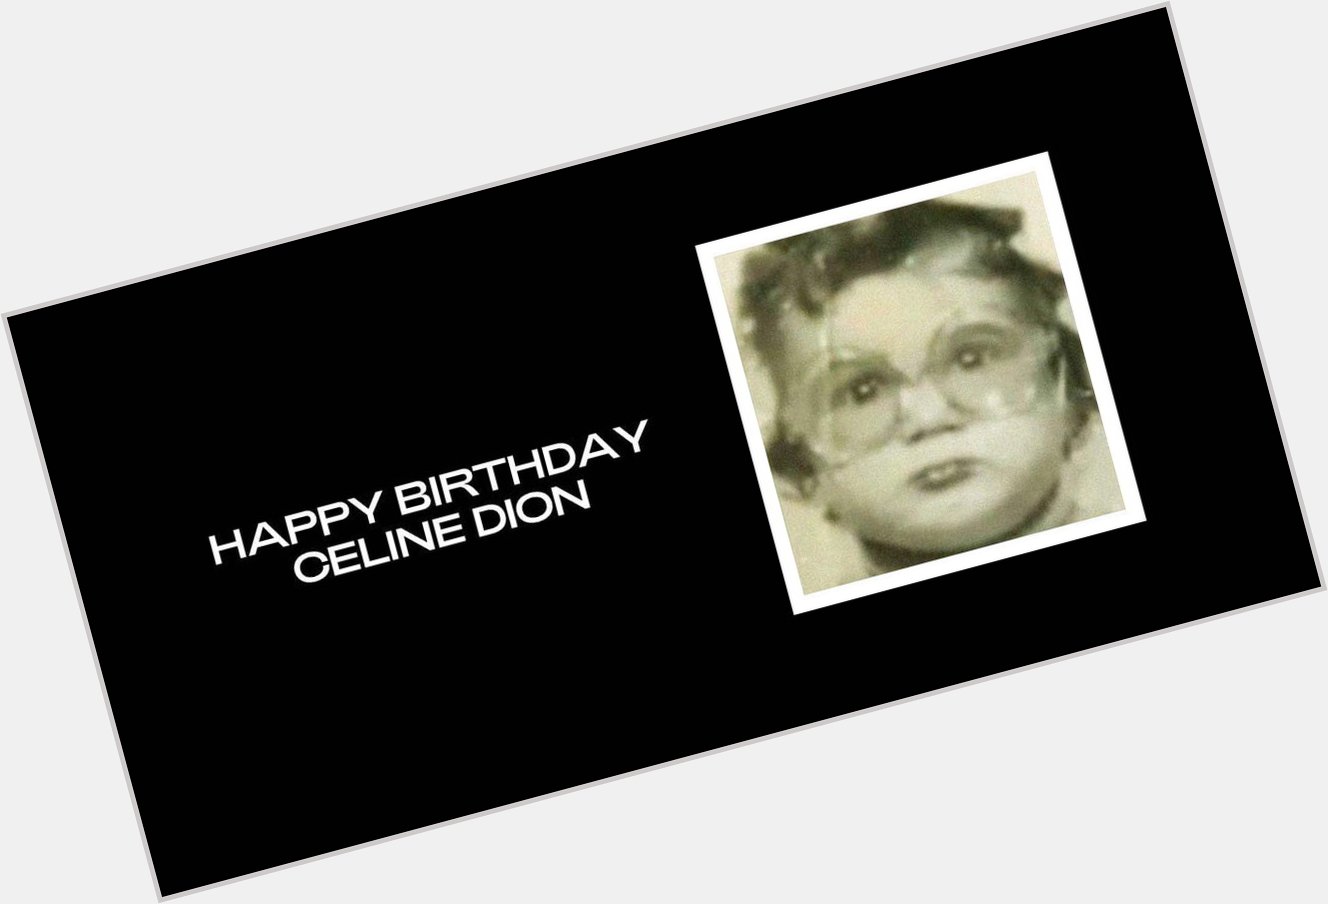 Beyoncé wishes Céline Dion a happy birthday on her website. 